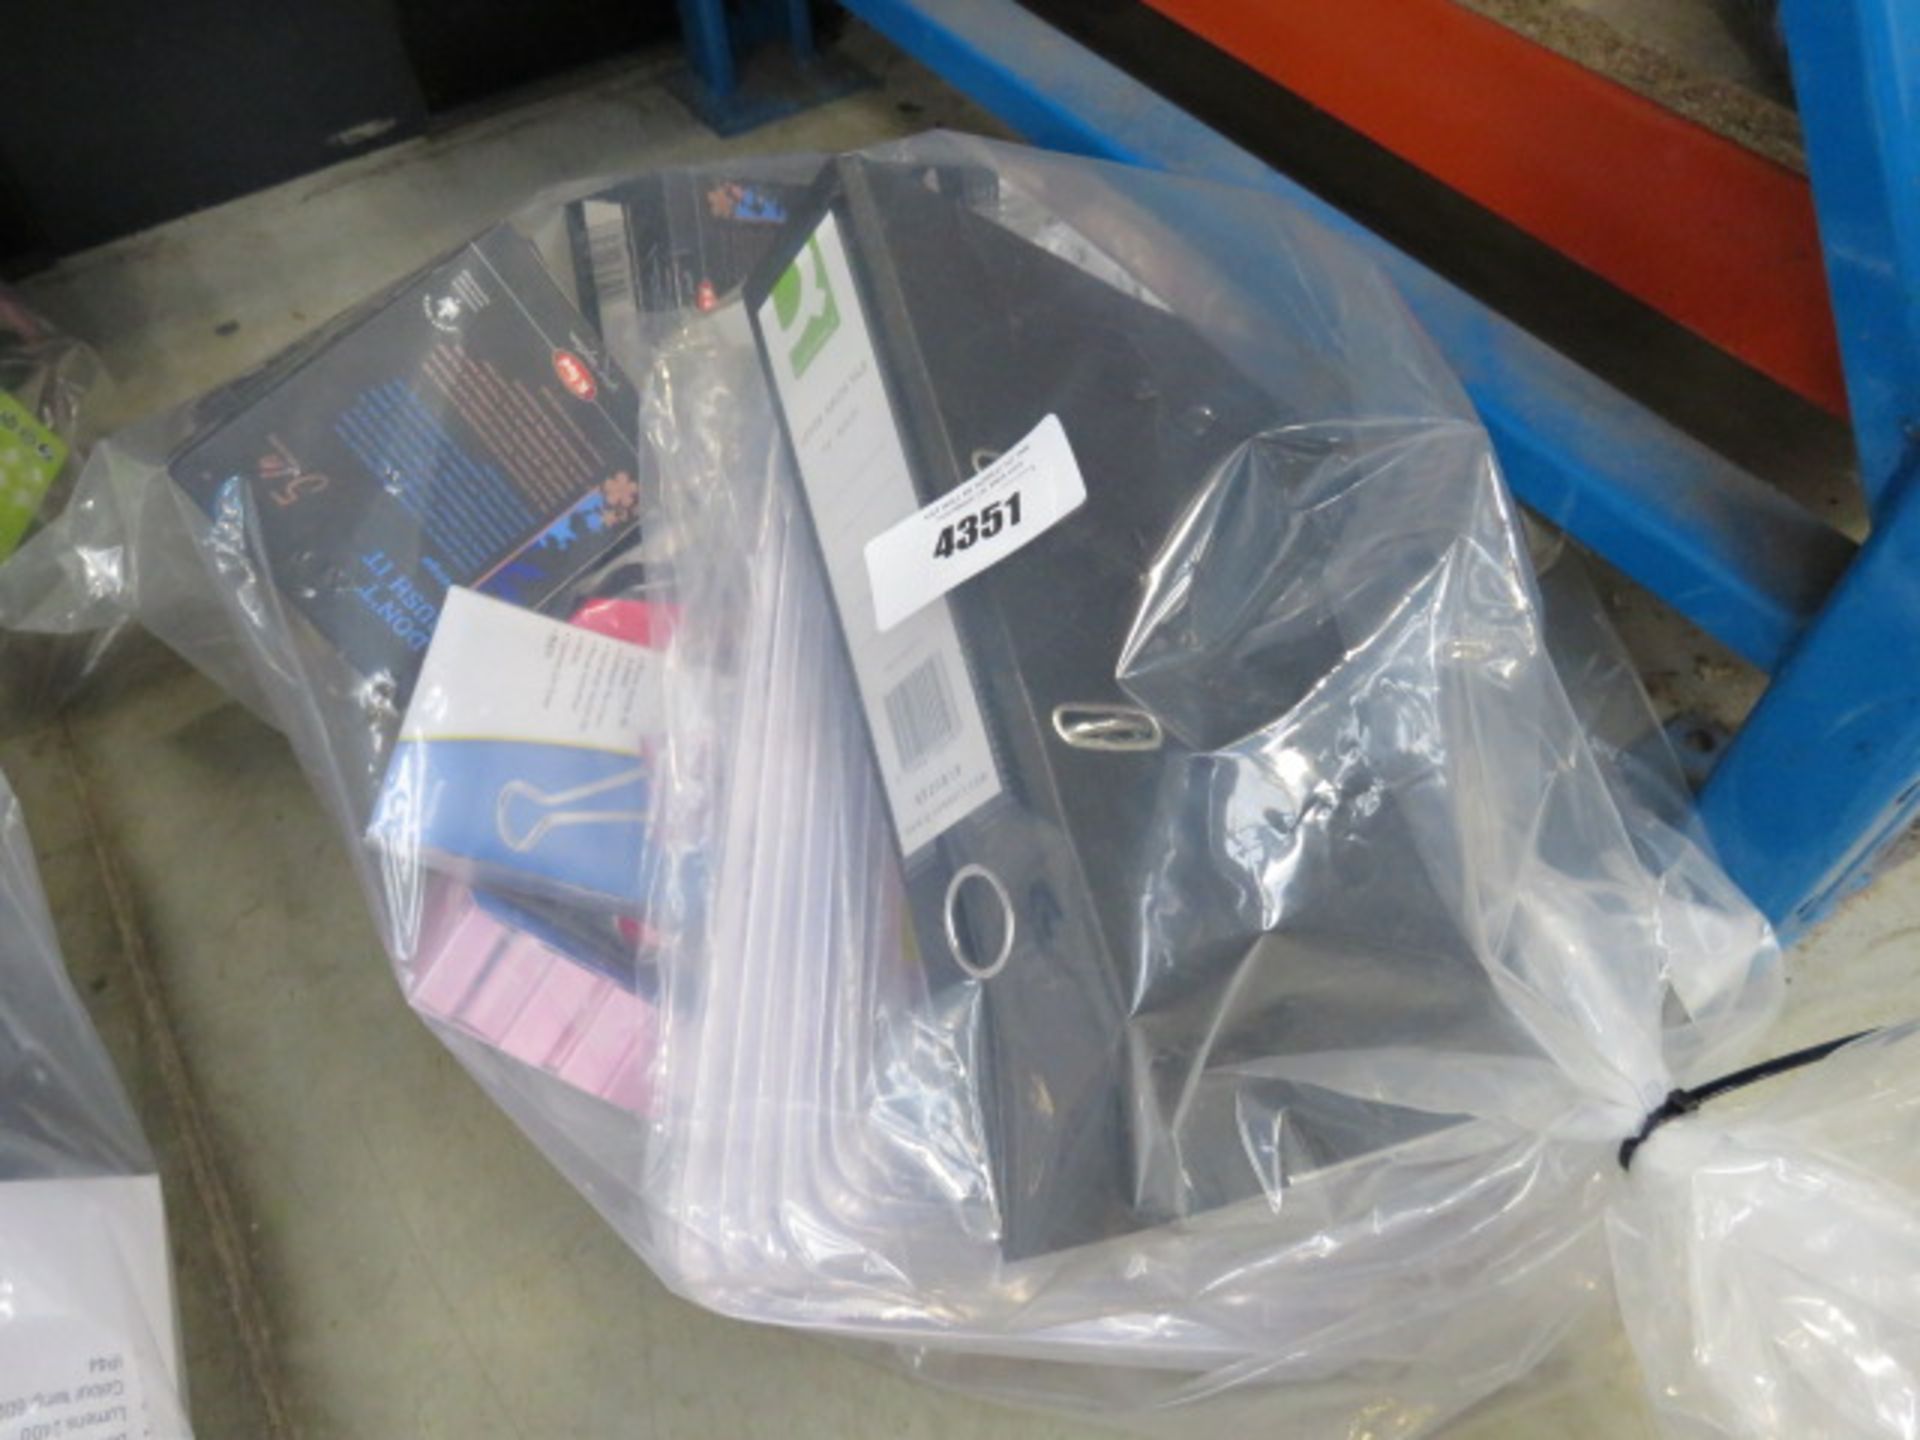 Bag containing lever arch files, de-icer, file clips etc.